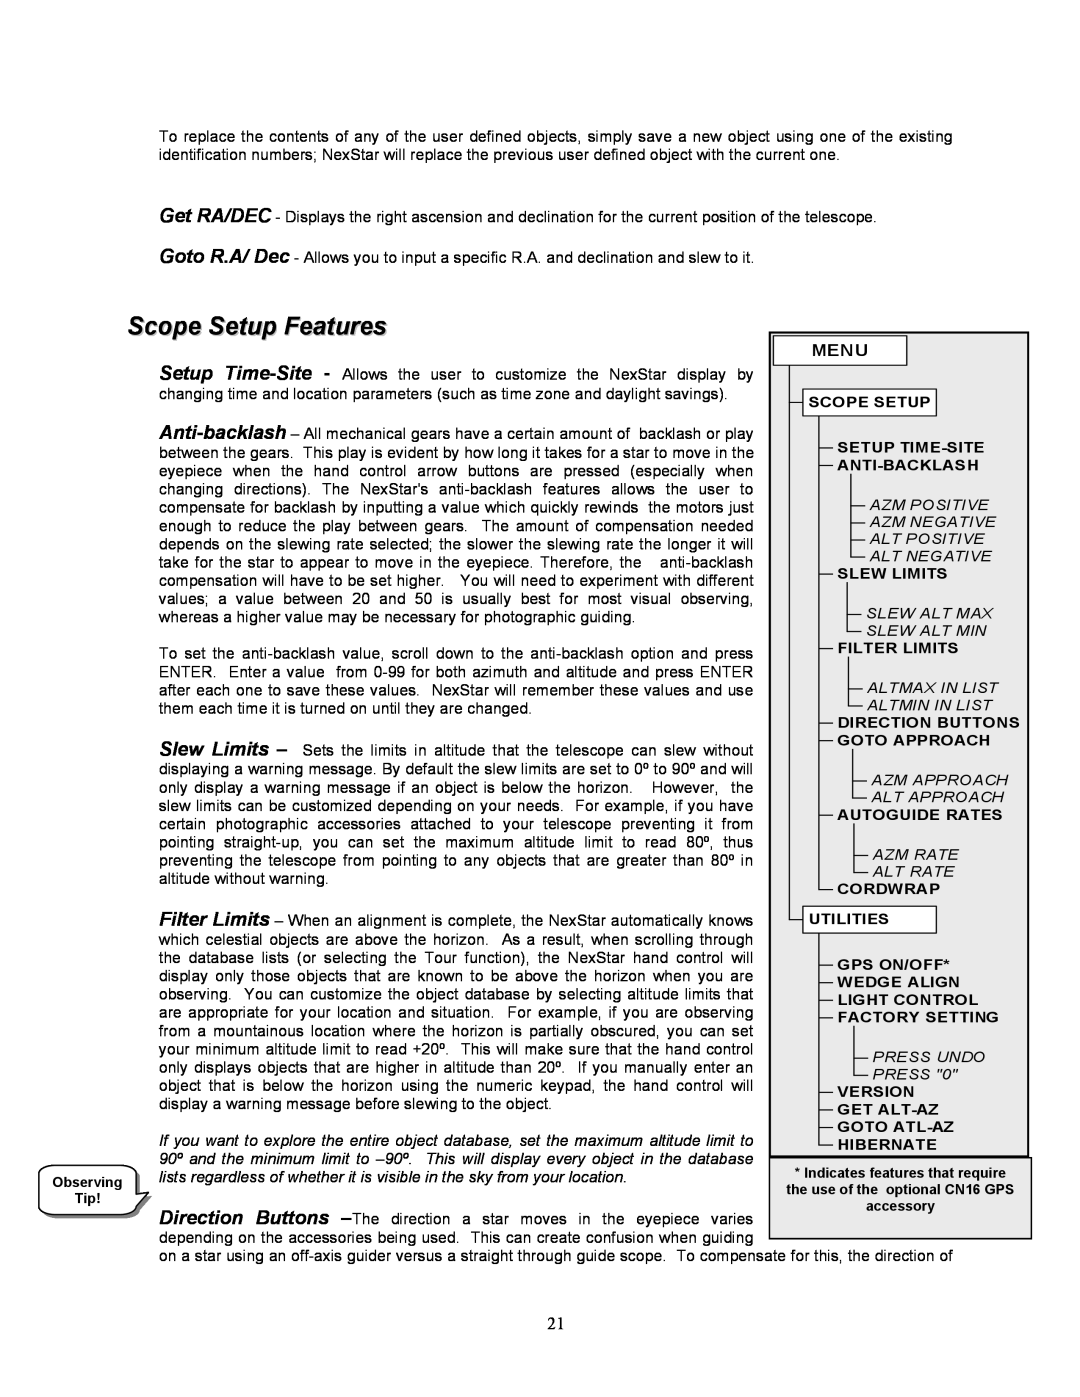 Celestron NexStar 8i manual Scope Setup Features, Menu 